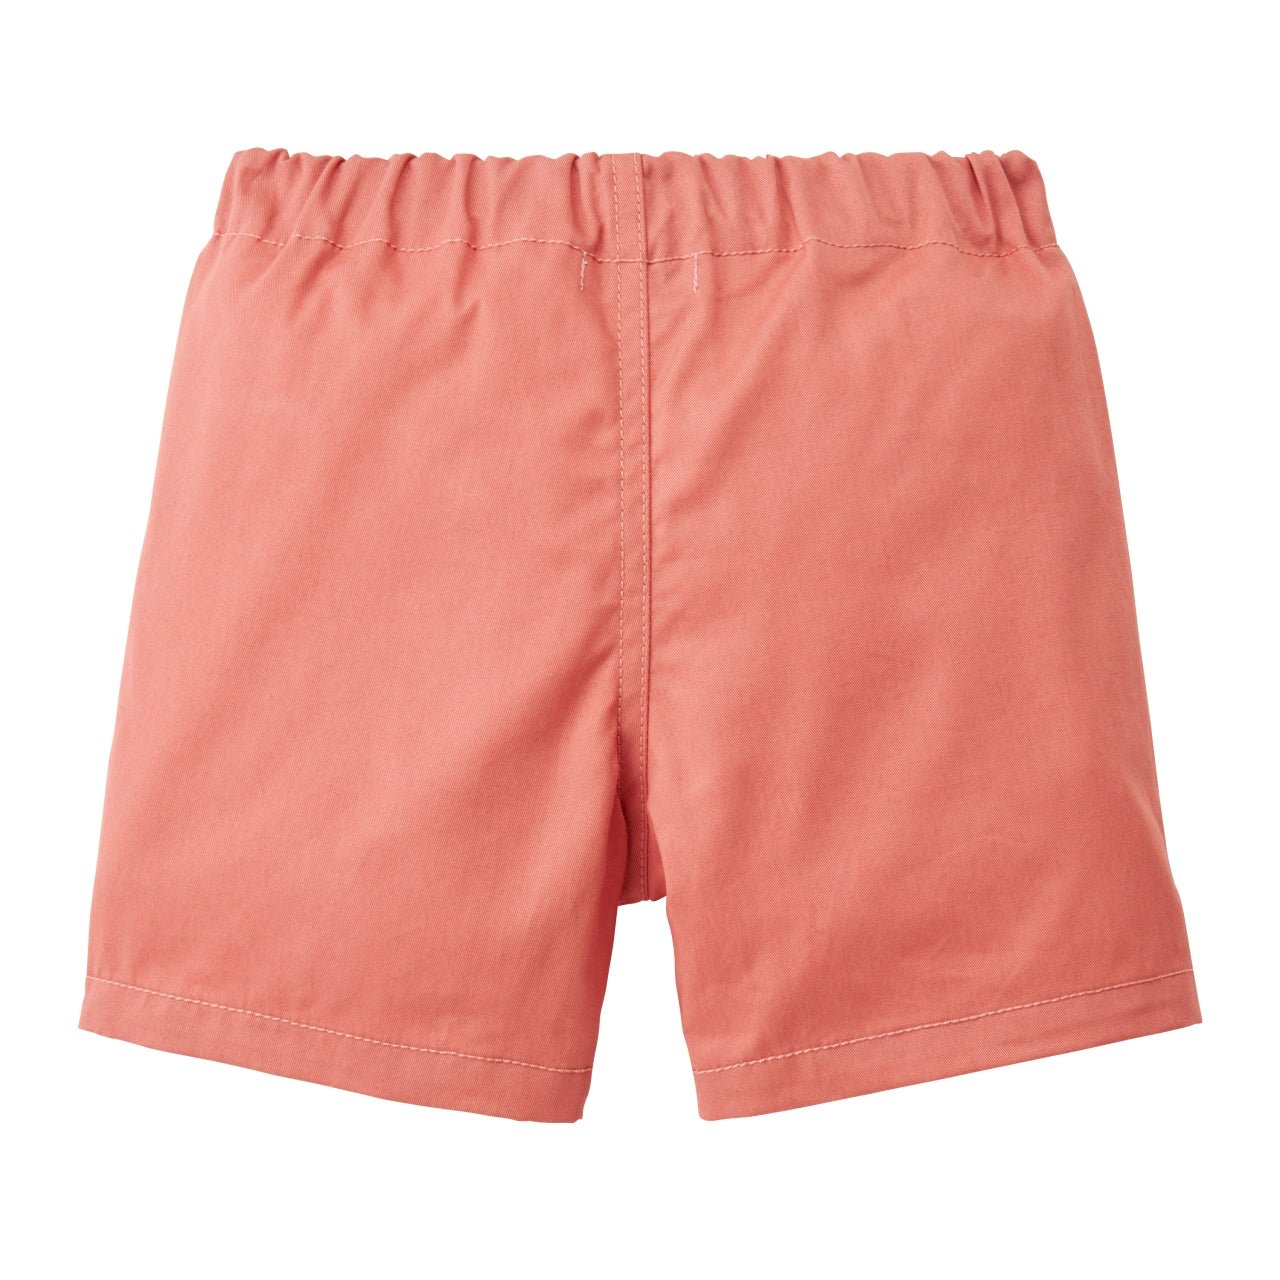 Mr. B Island Shorts - 60-3105-571-12-80